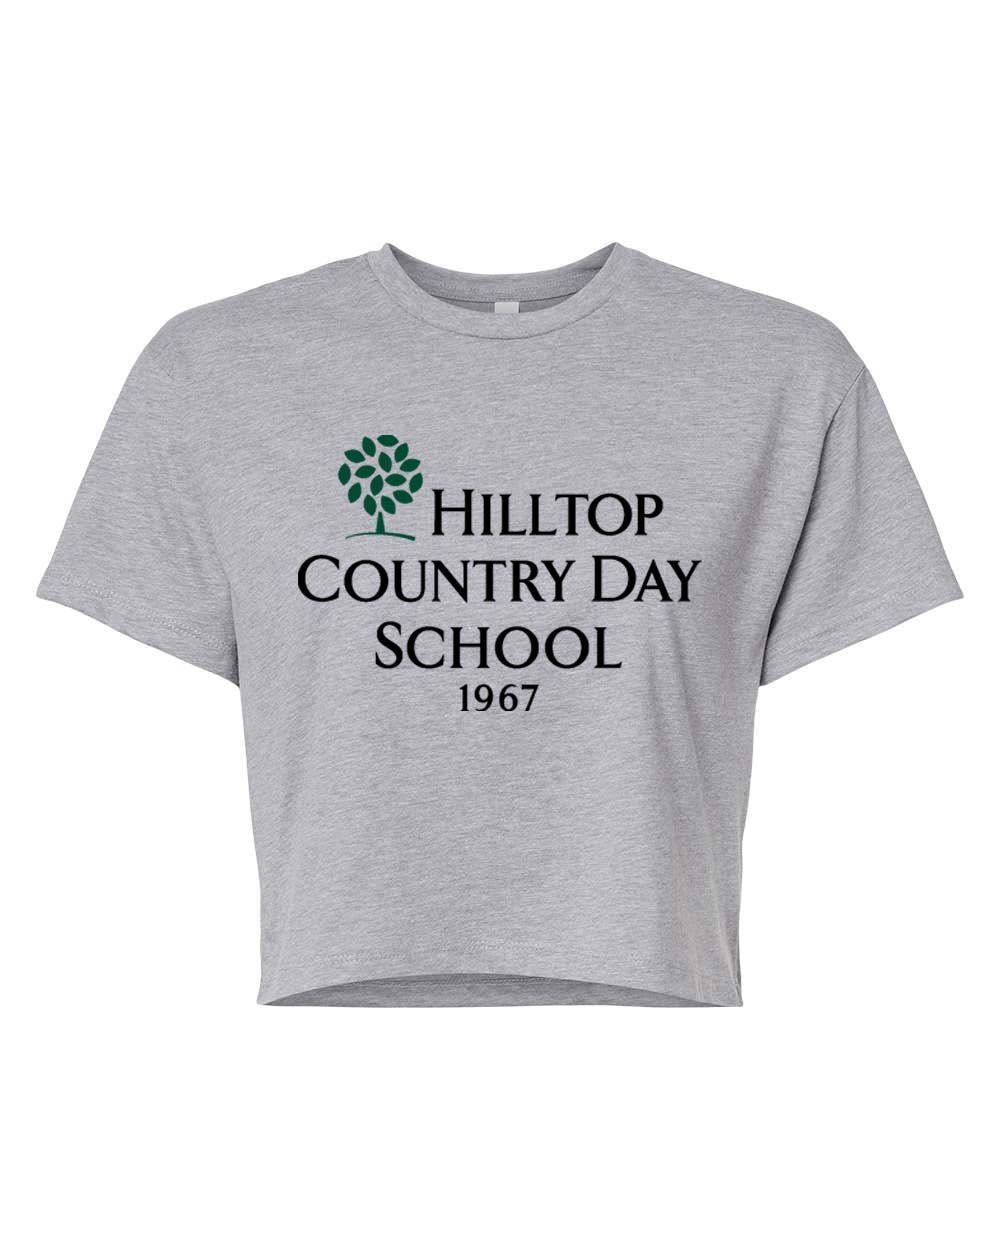 Hilltop Country Day School Design 2 crop top